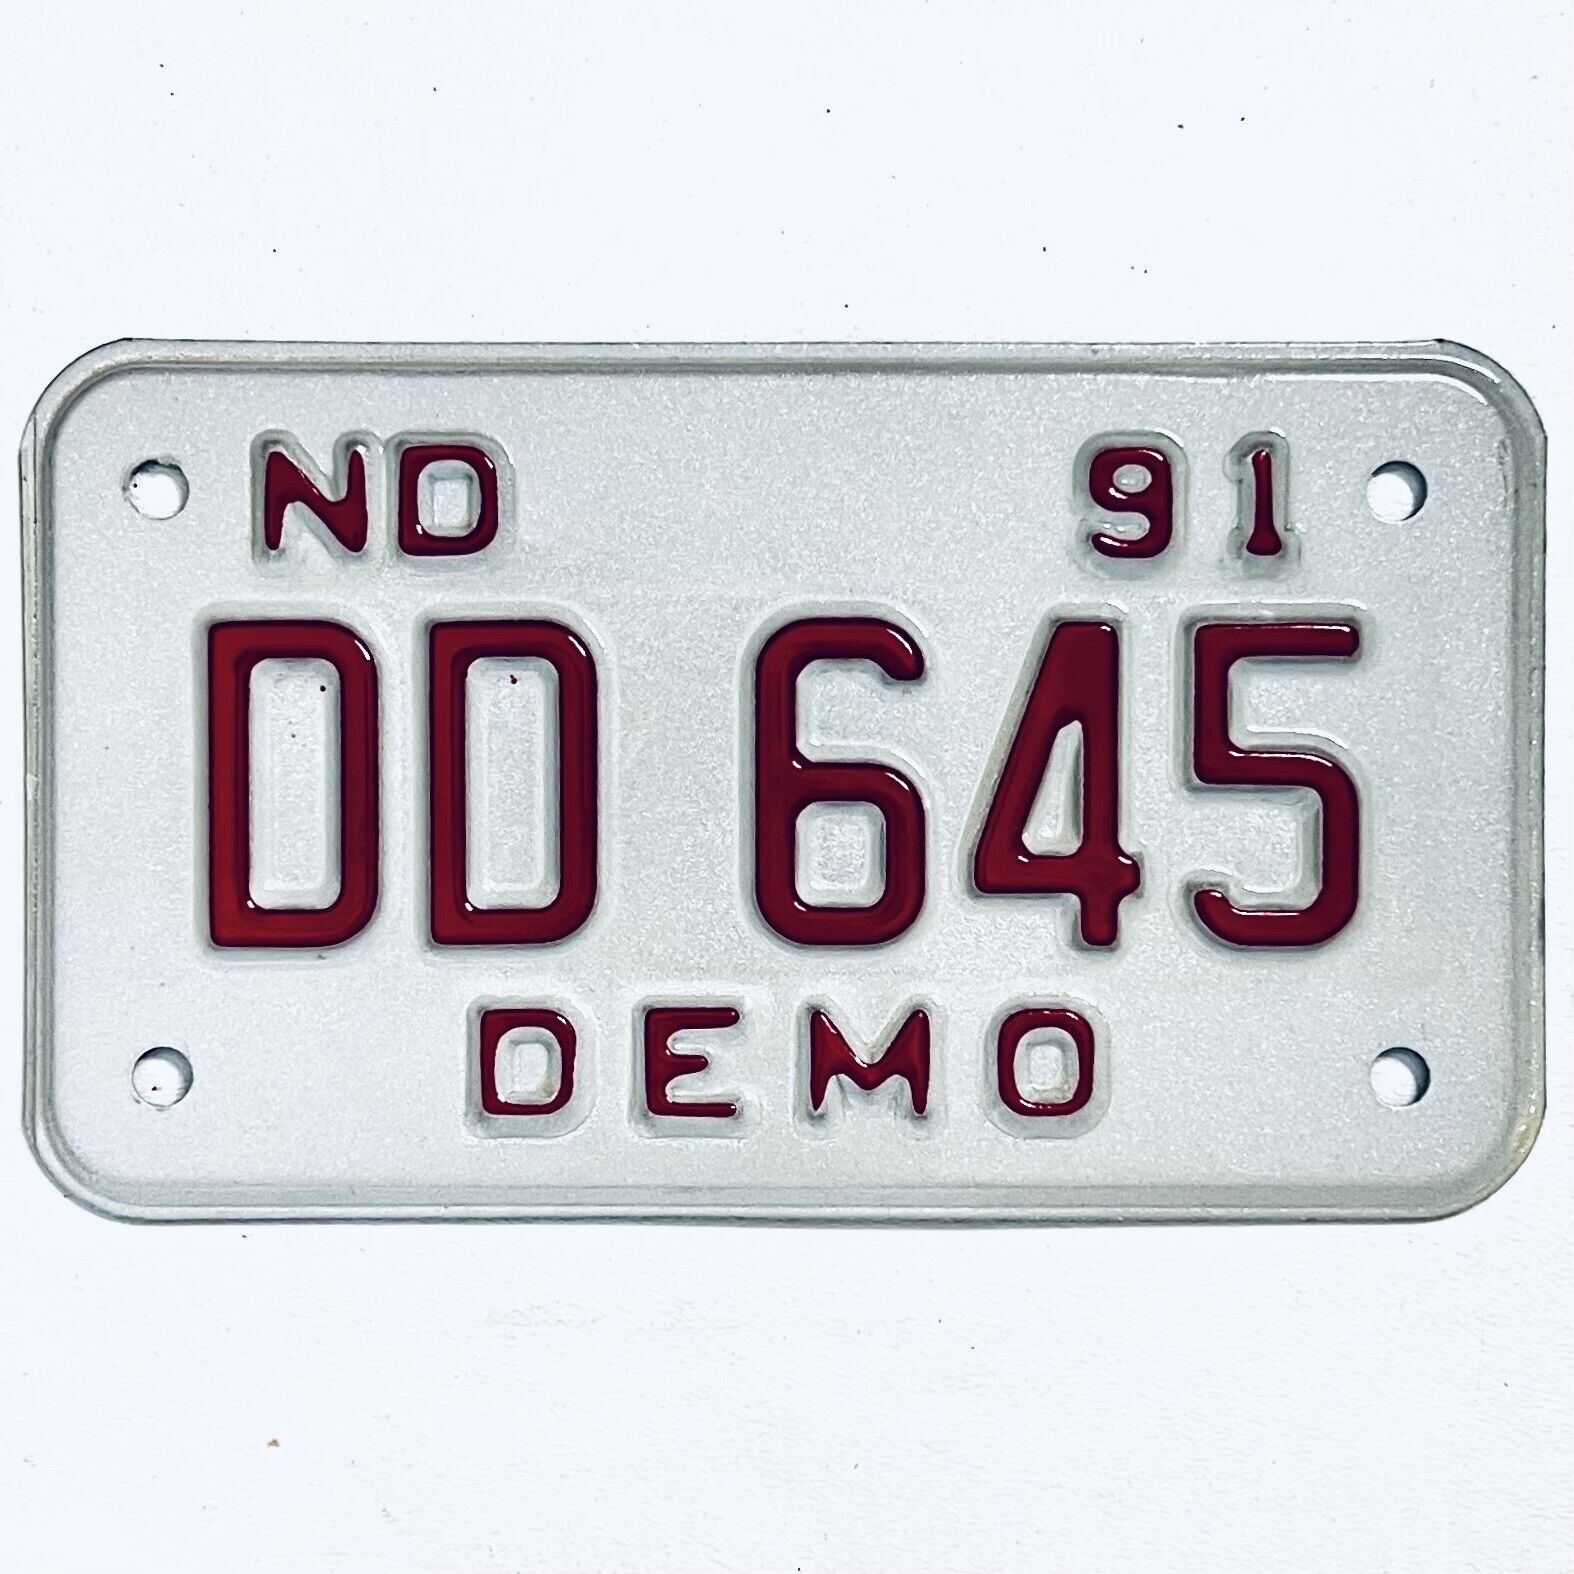 1991 United States North Dakota DEMO Special License Plate DD 645